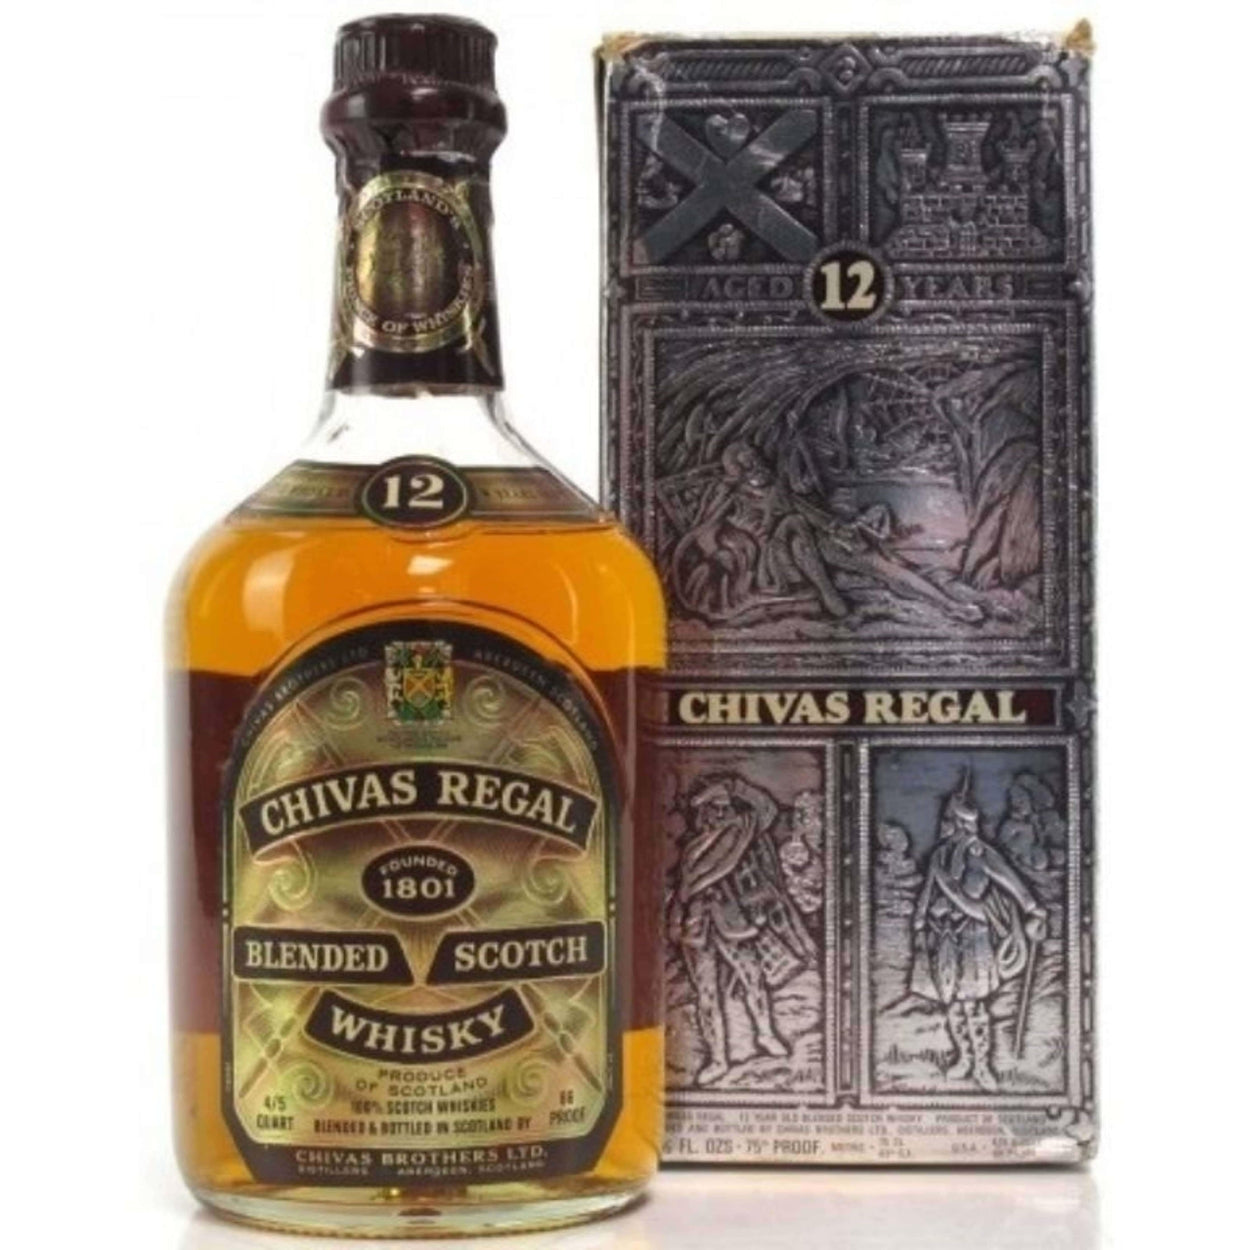 Chivas Regal - 12 year Scotch Whisky (1L)